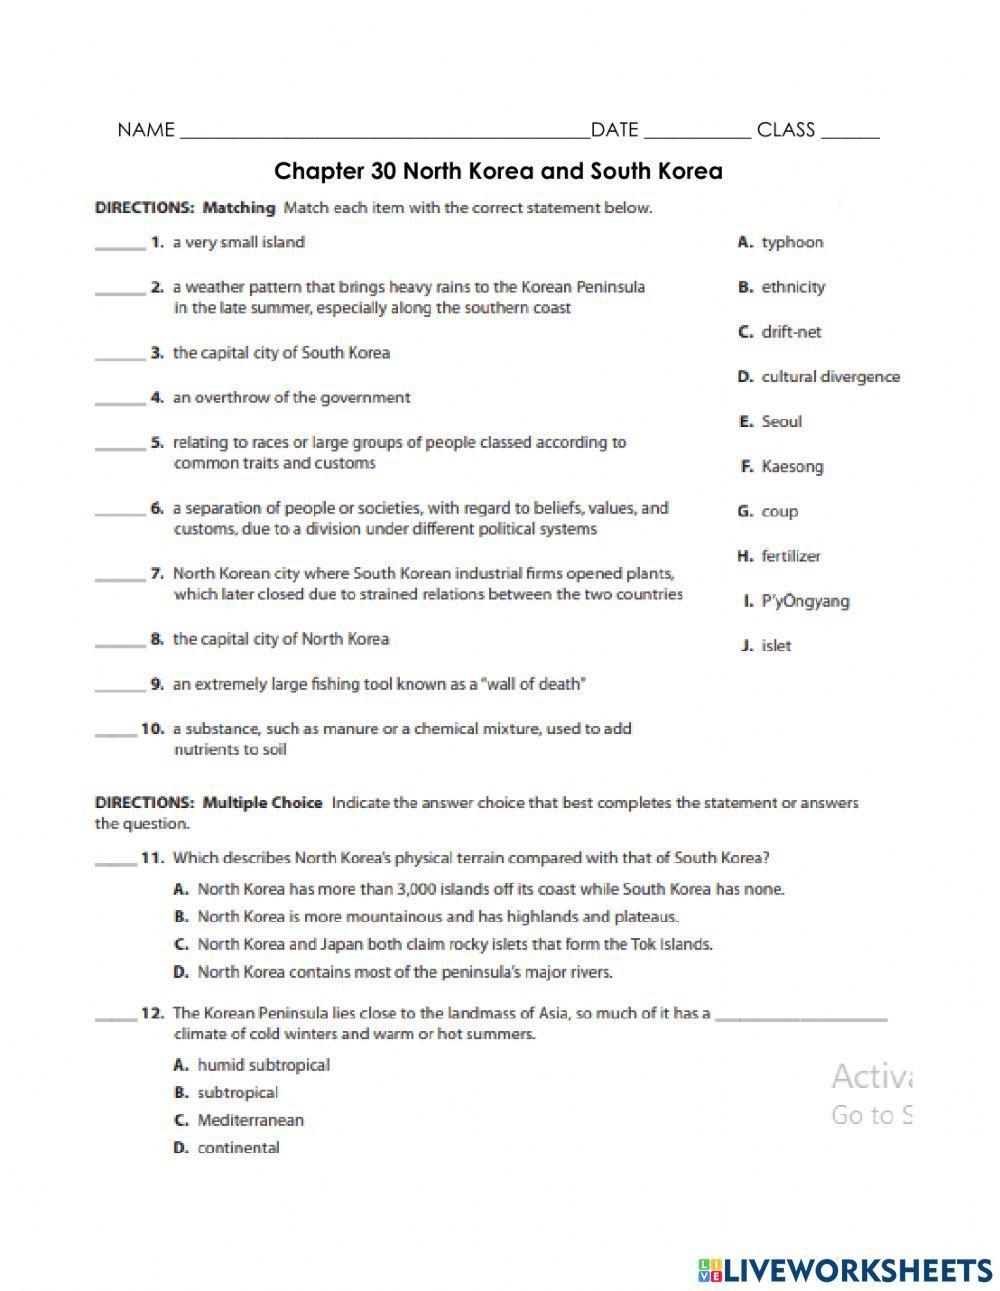 Chapter 30 North Korea and South Korea